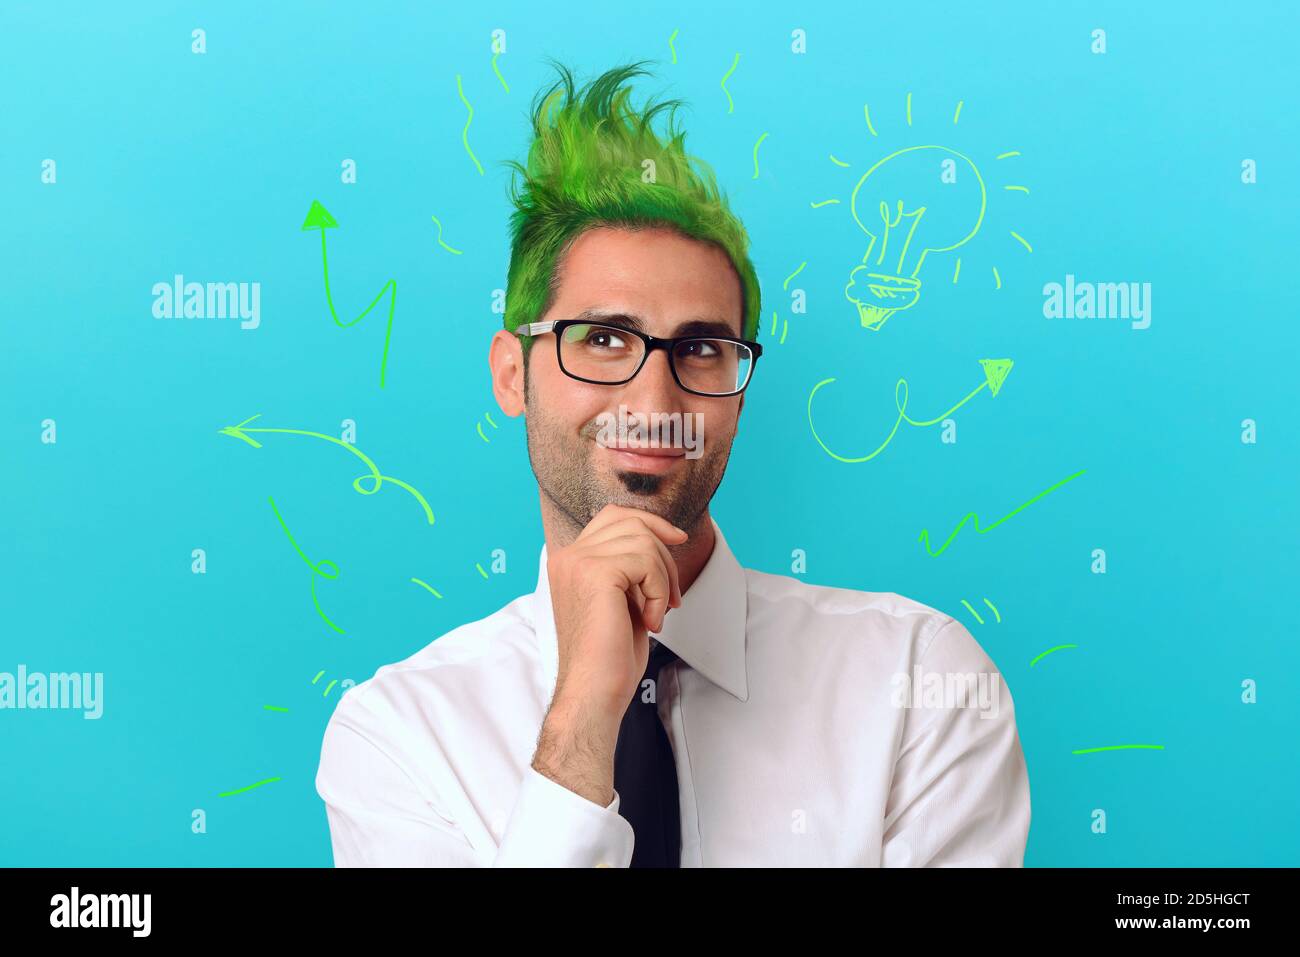 Kreativer Geschäftsmann mit grünem Haar denkt an ein verrücktes Projekt Stockfoto